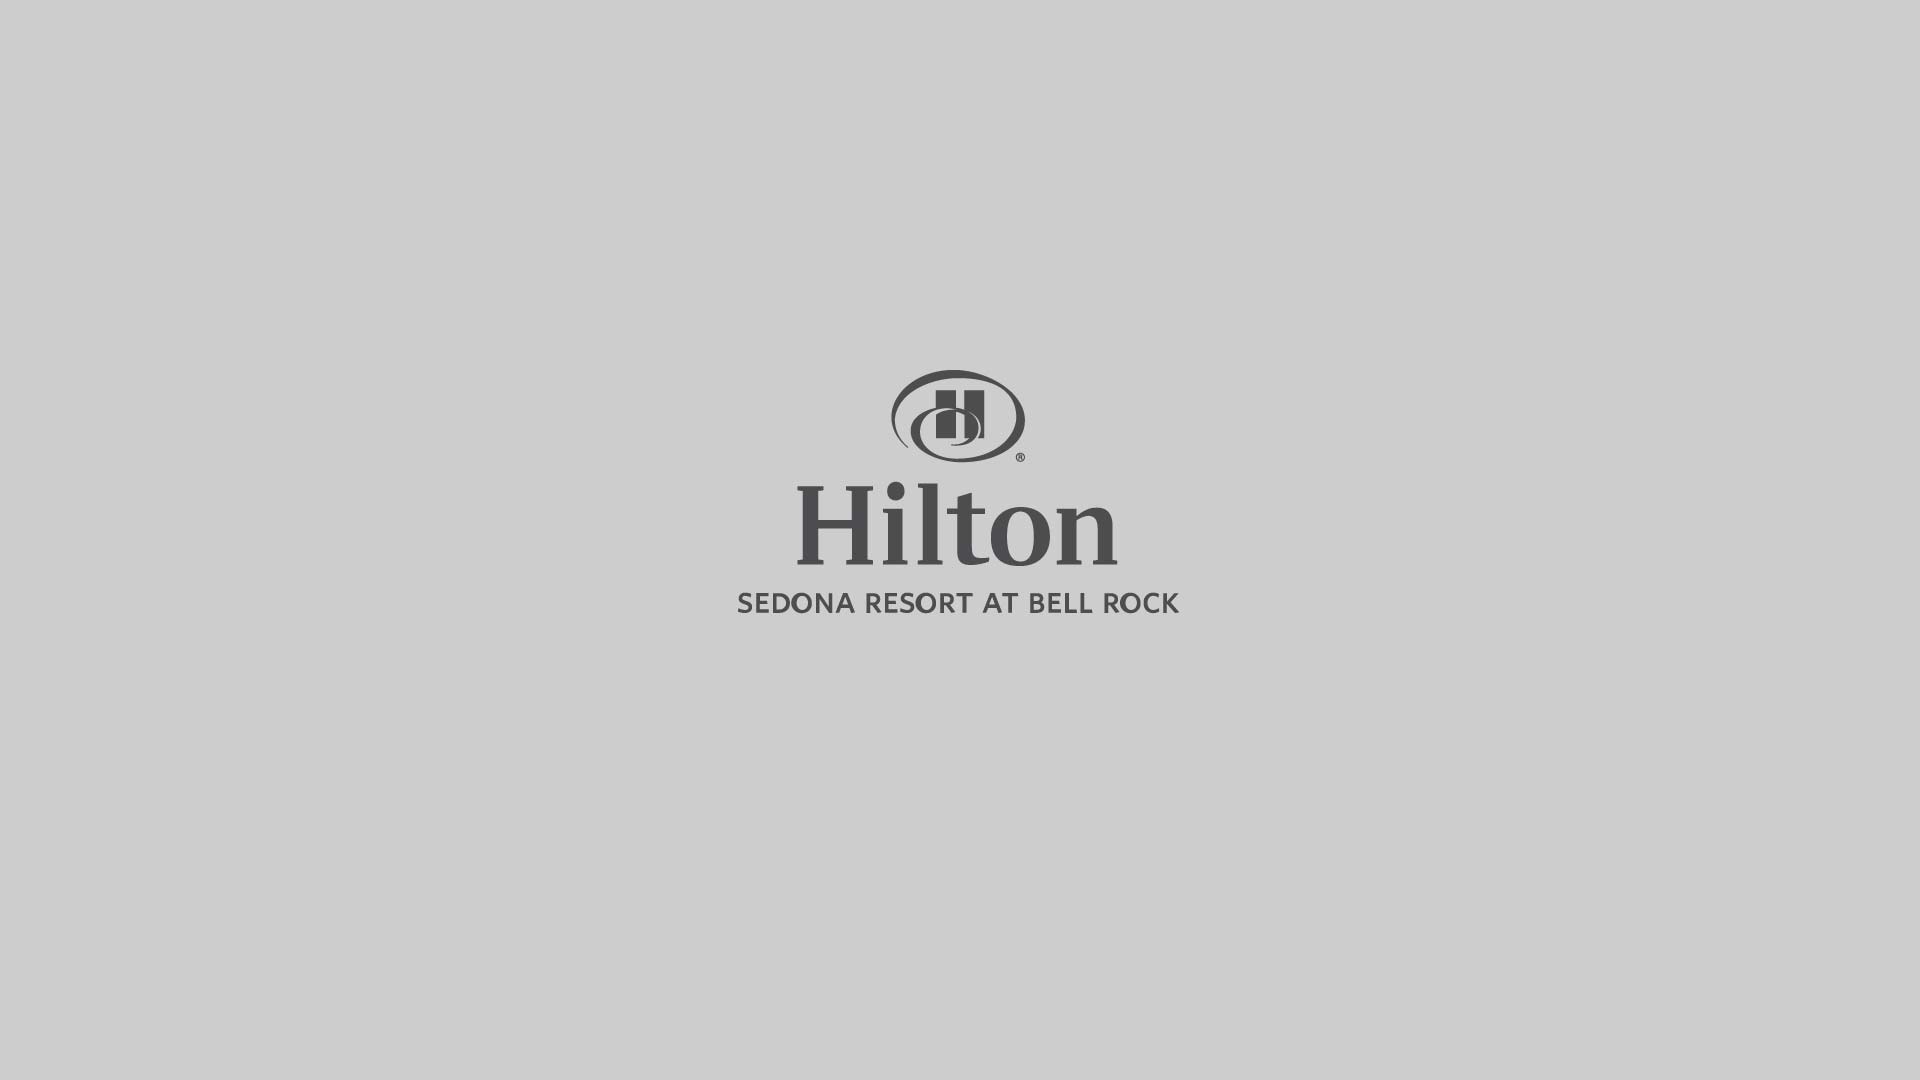 Arizona Red Rocks Logo - Hilton Sedona Resort at Bell Rock Resort in Arizona